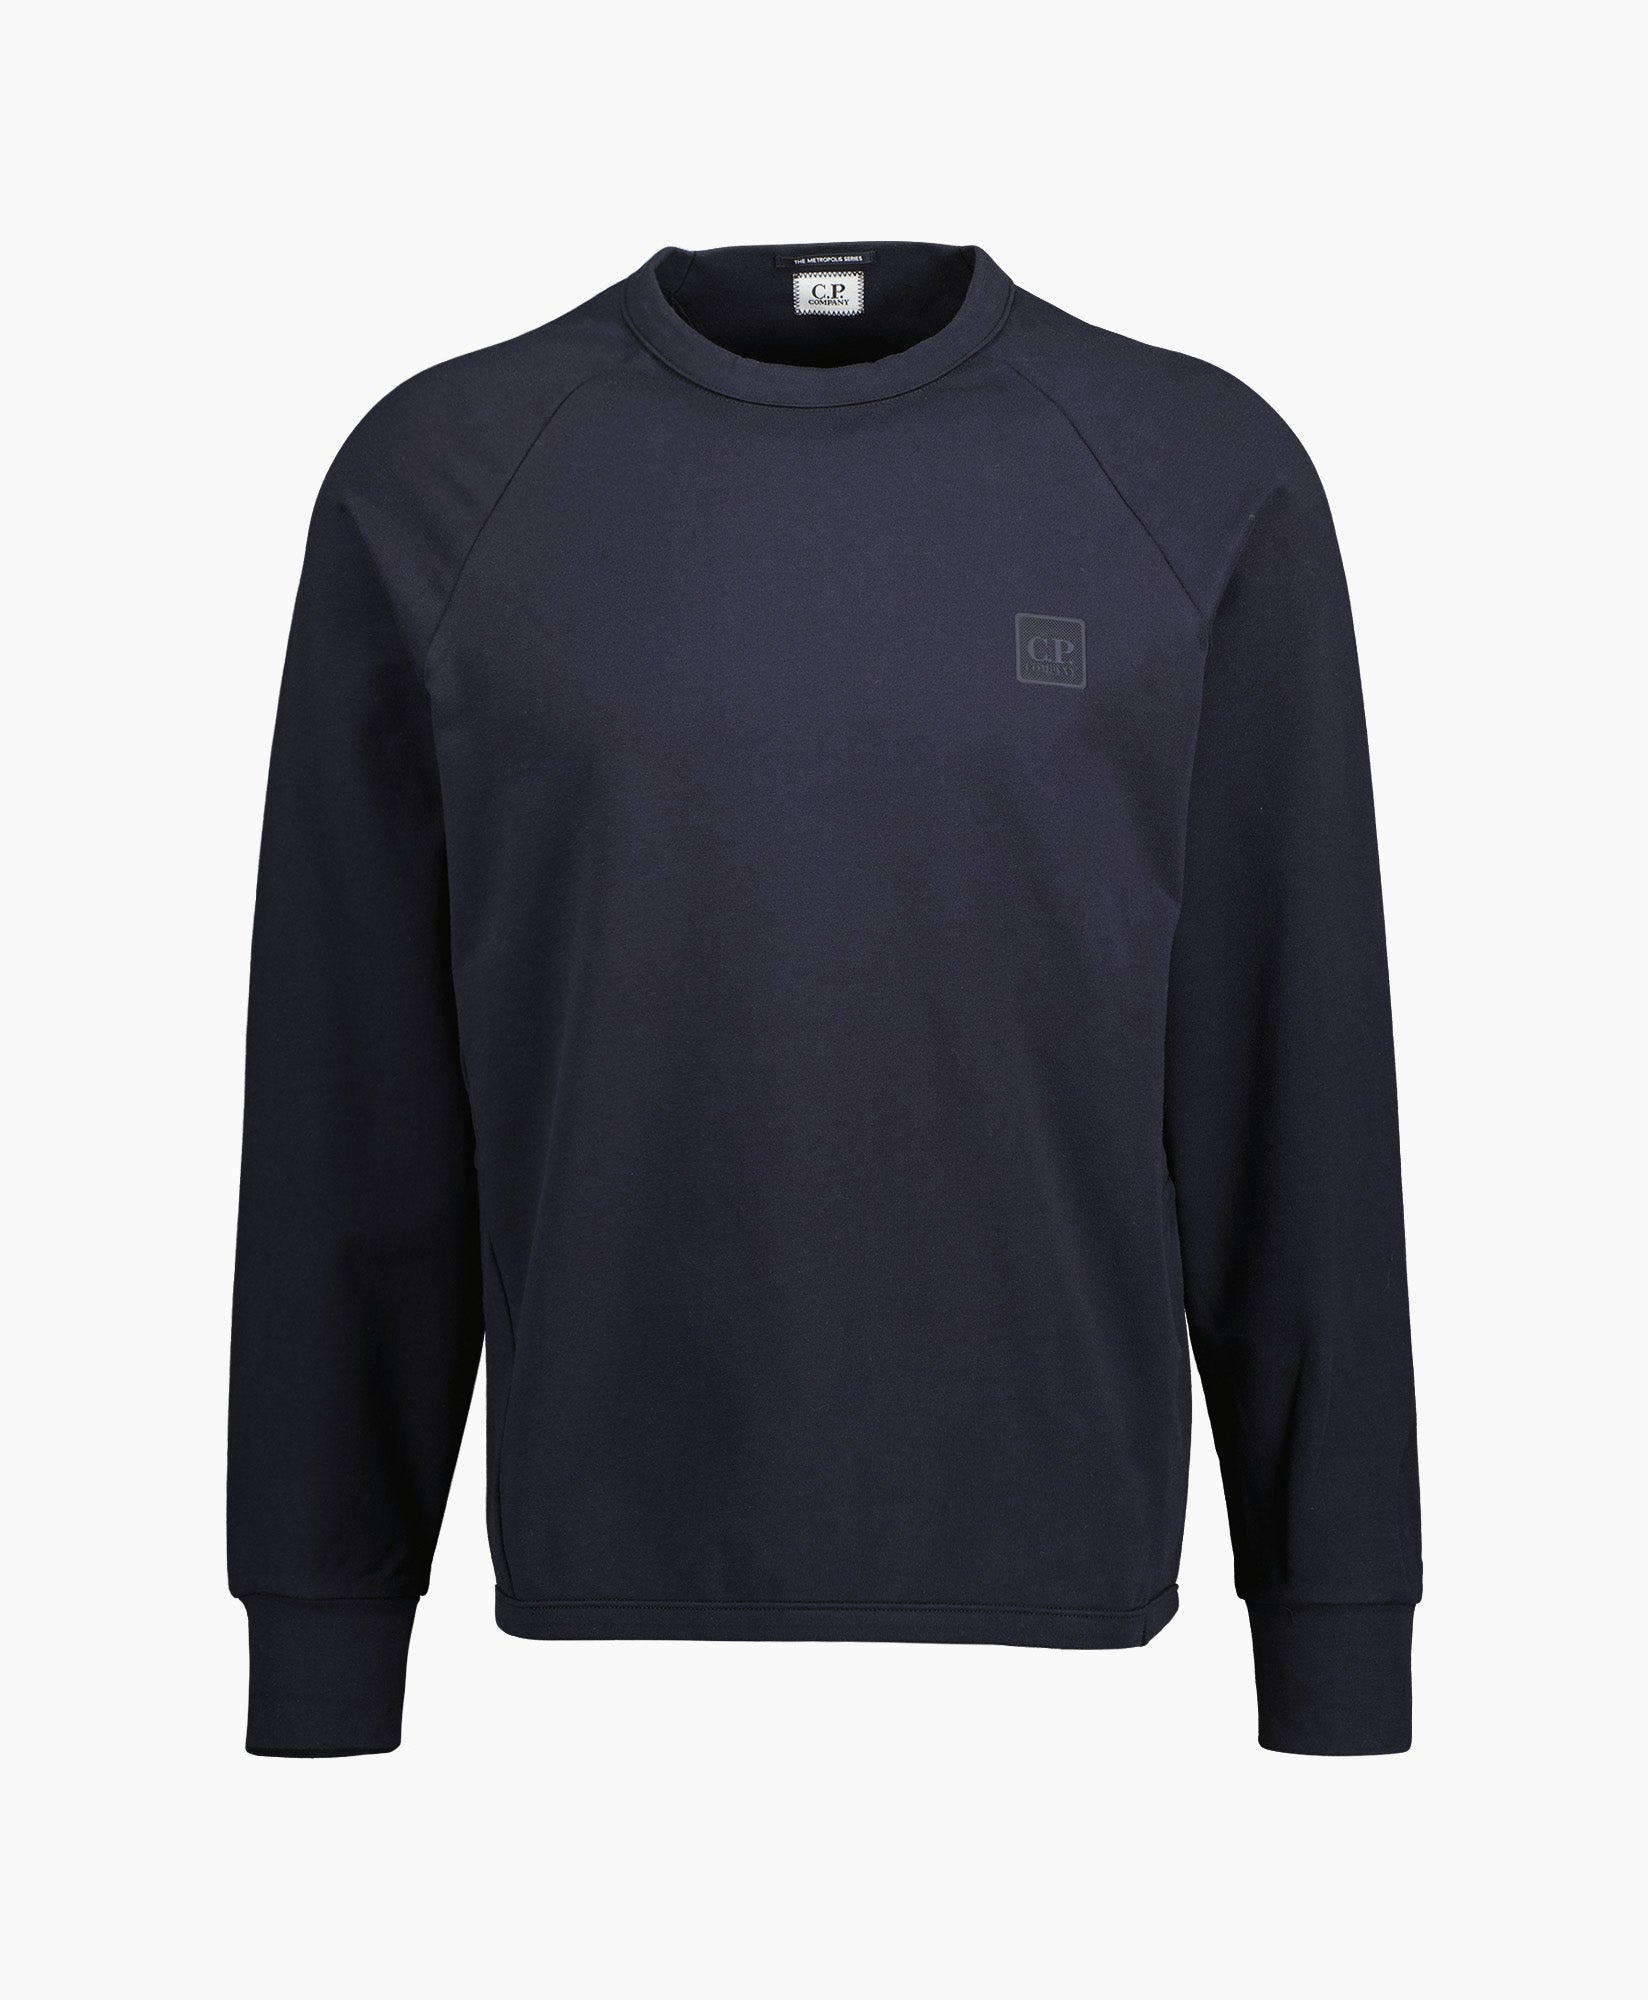 C.P. Company Black Jersey Sweater